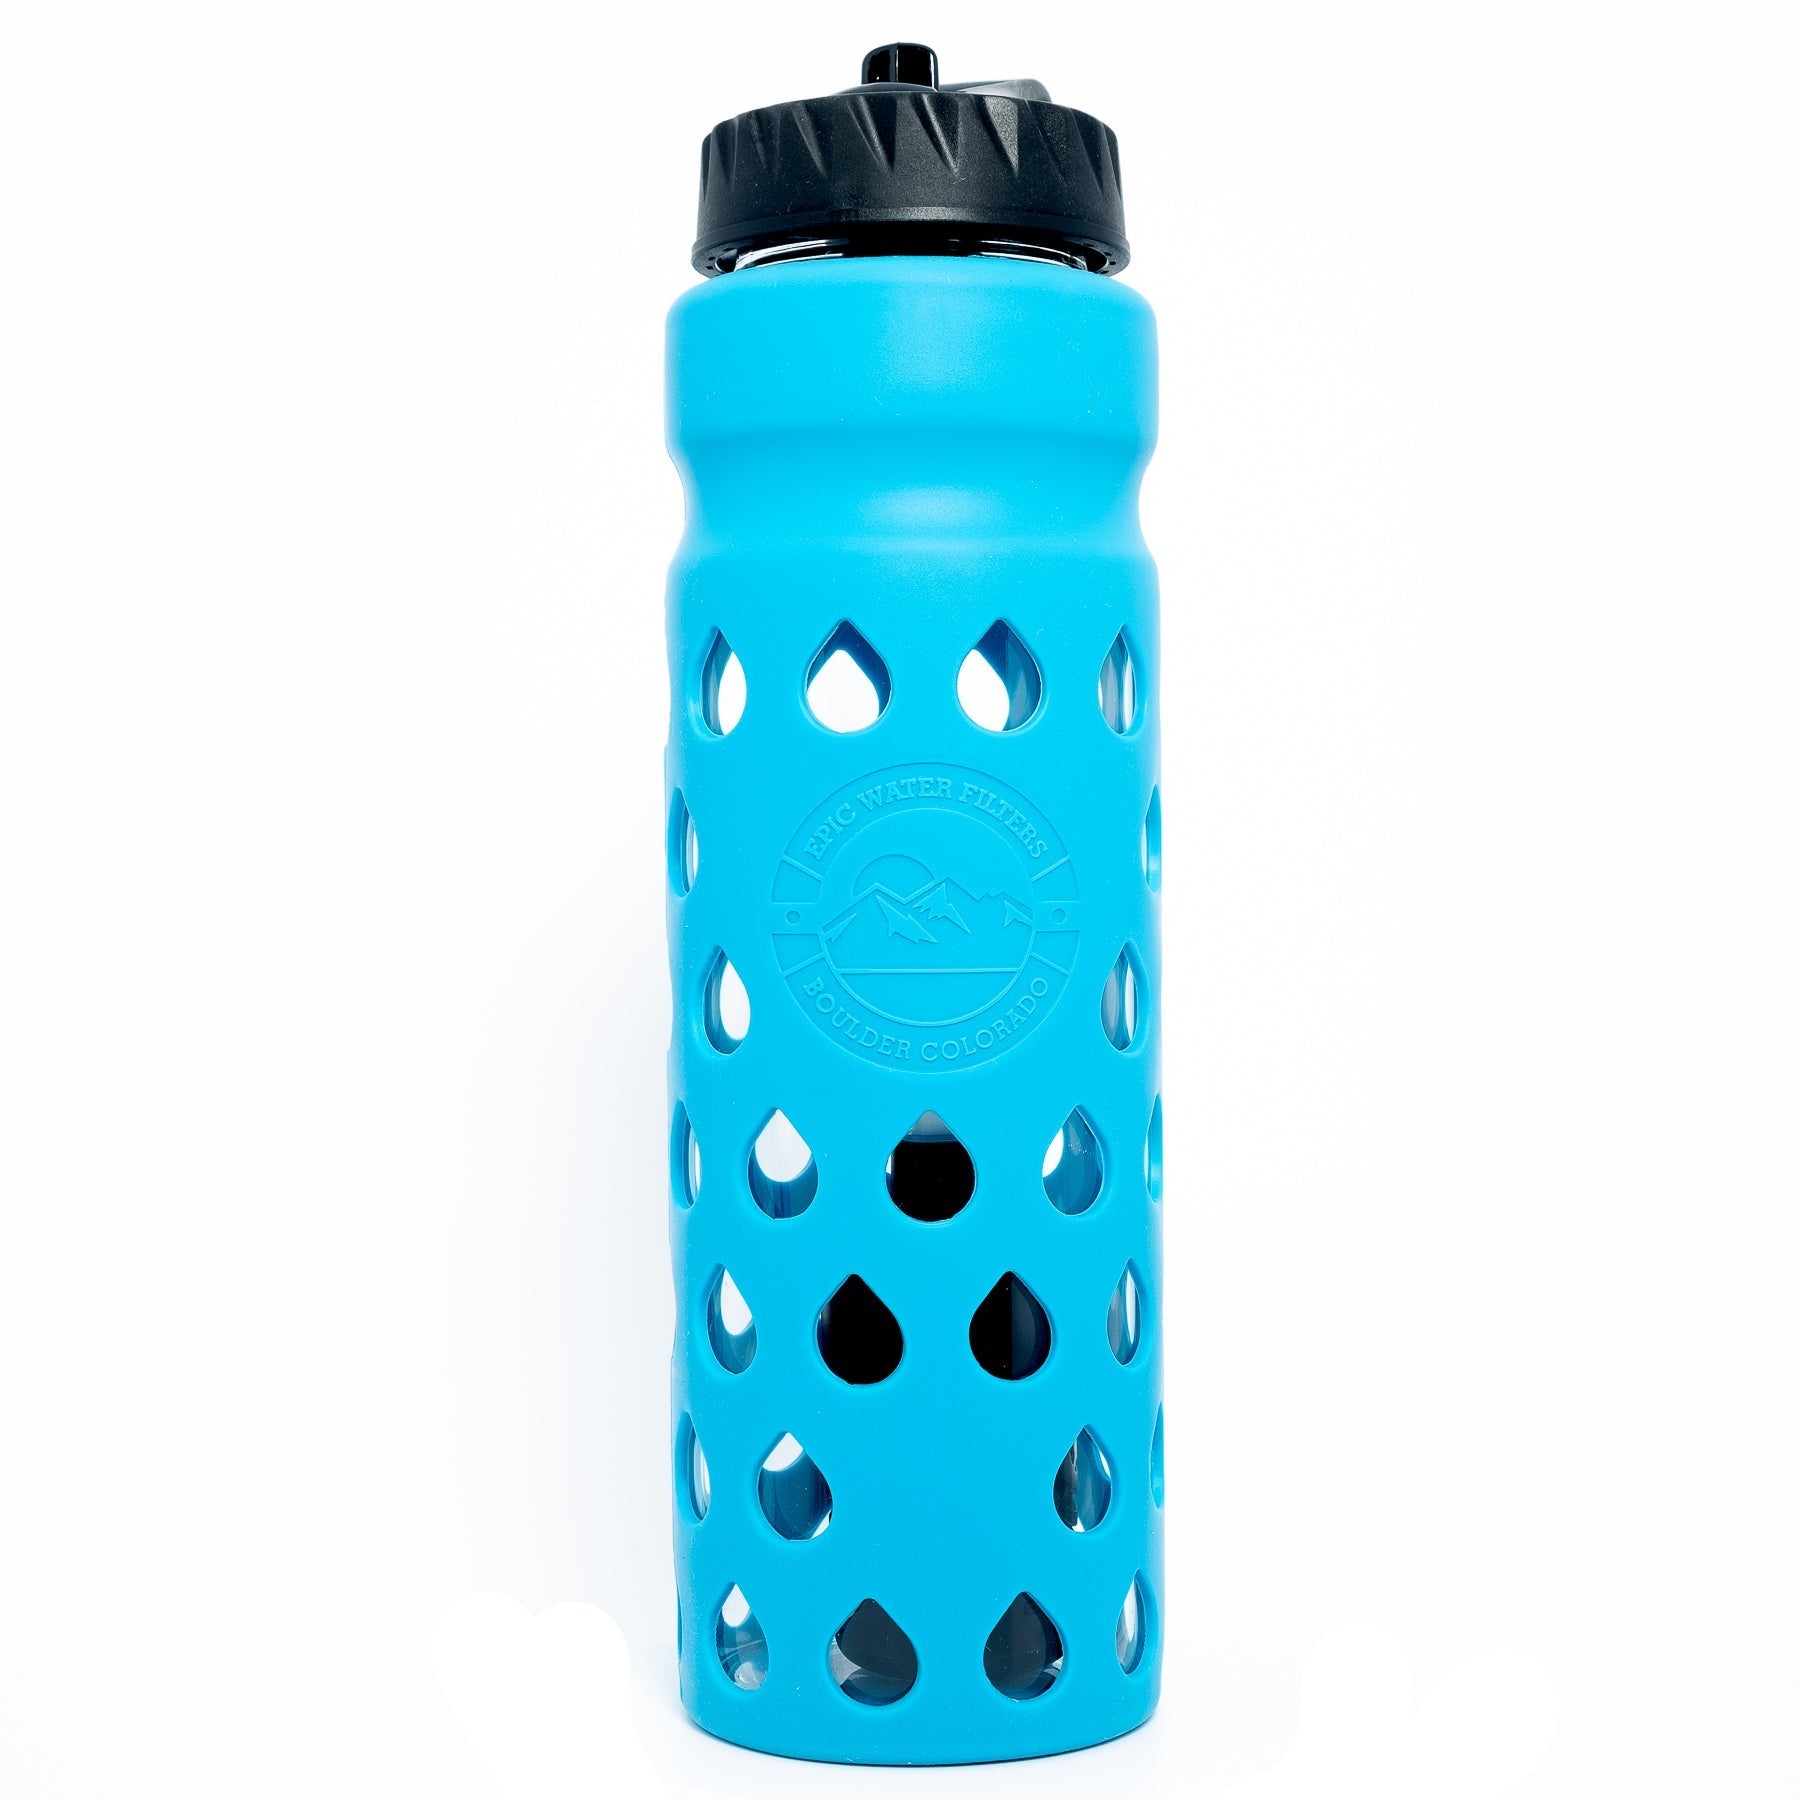 Epic Escape Glass Bottle with Filter 32 oz Blue